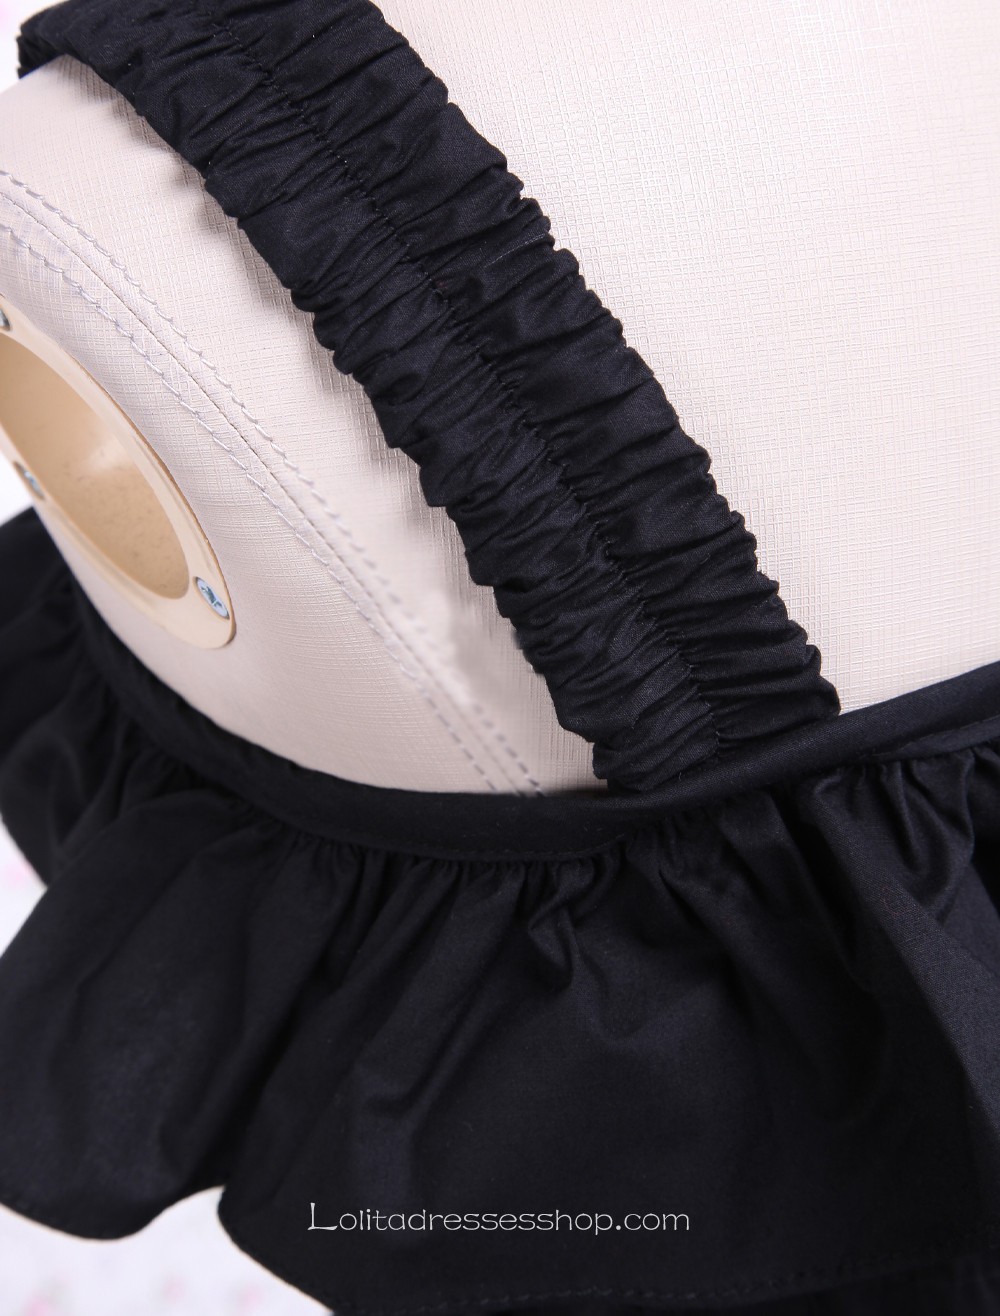 Cotton Three-Layers Bows Black And White Classic Lolita Dress